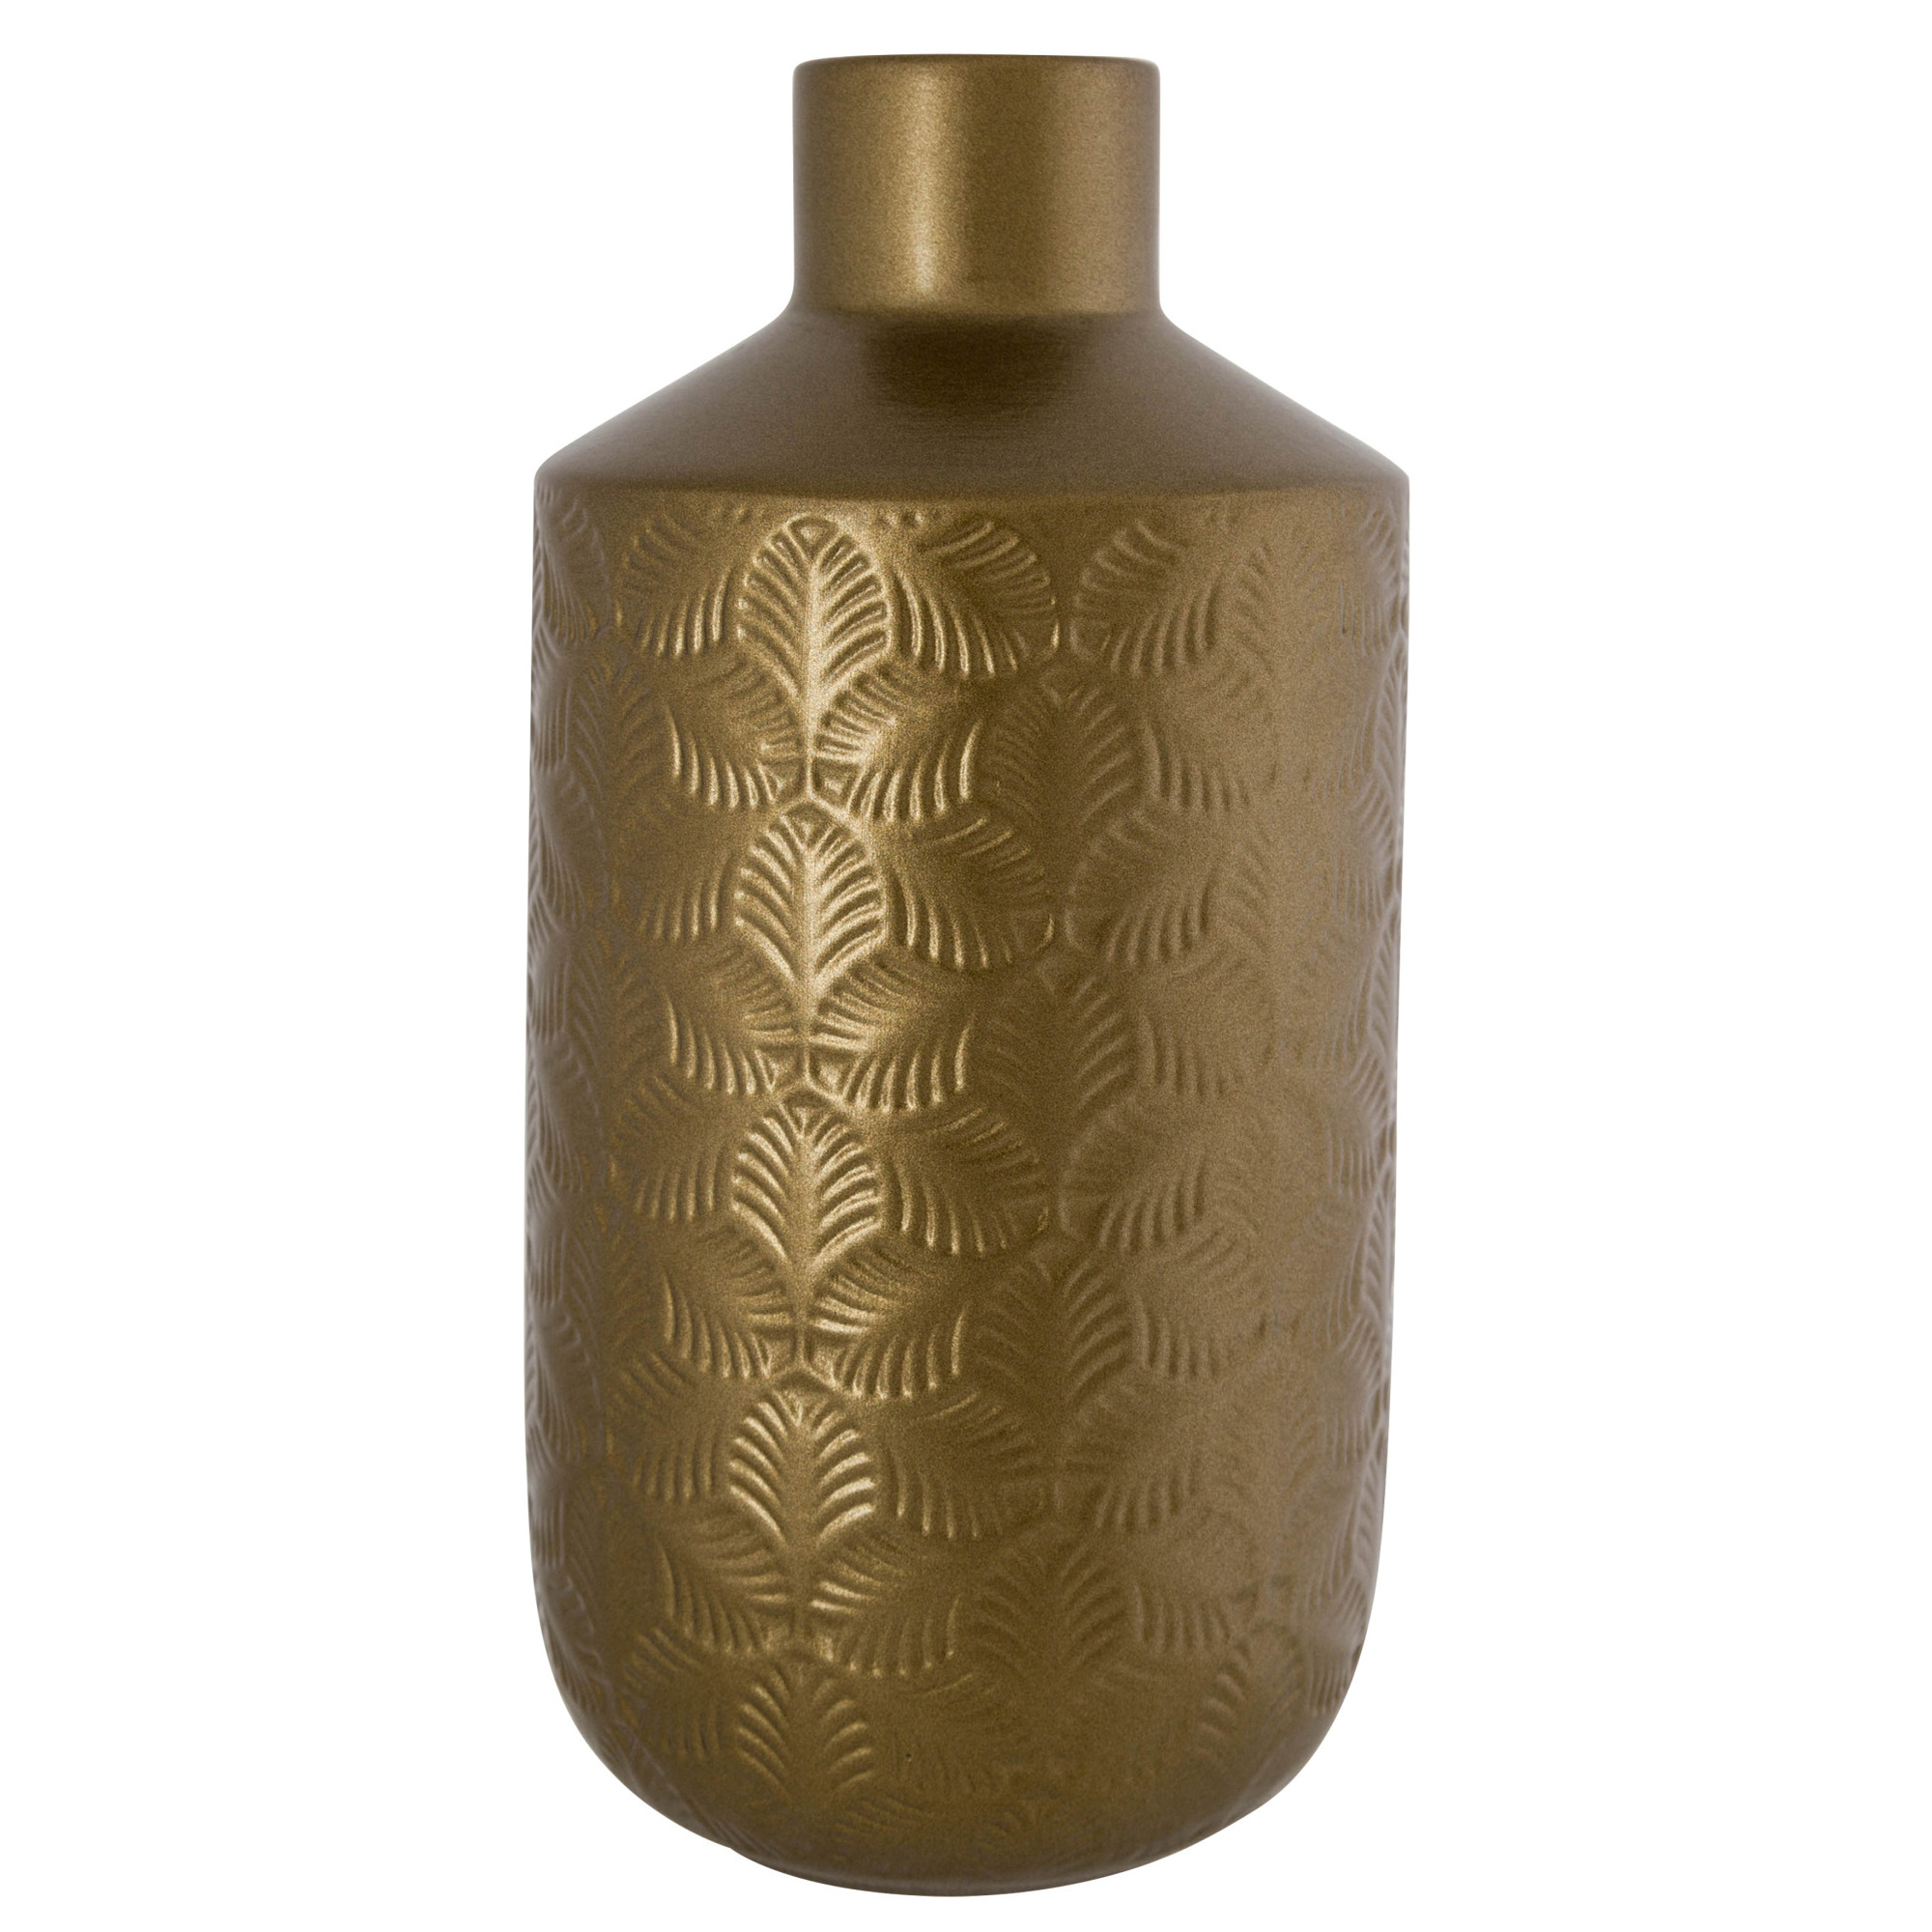 Bloemenvaas/vazen van brons kleur keramiek H30 x D15 cm